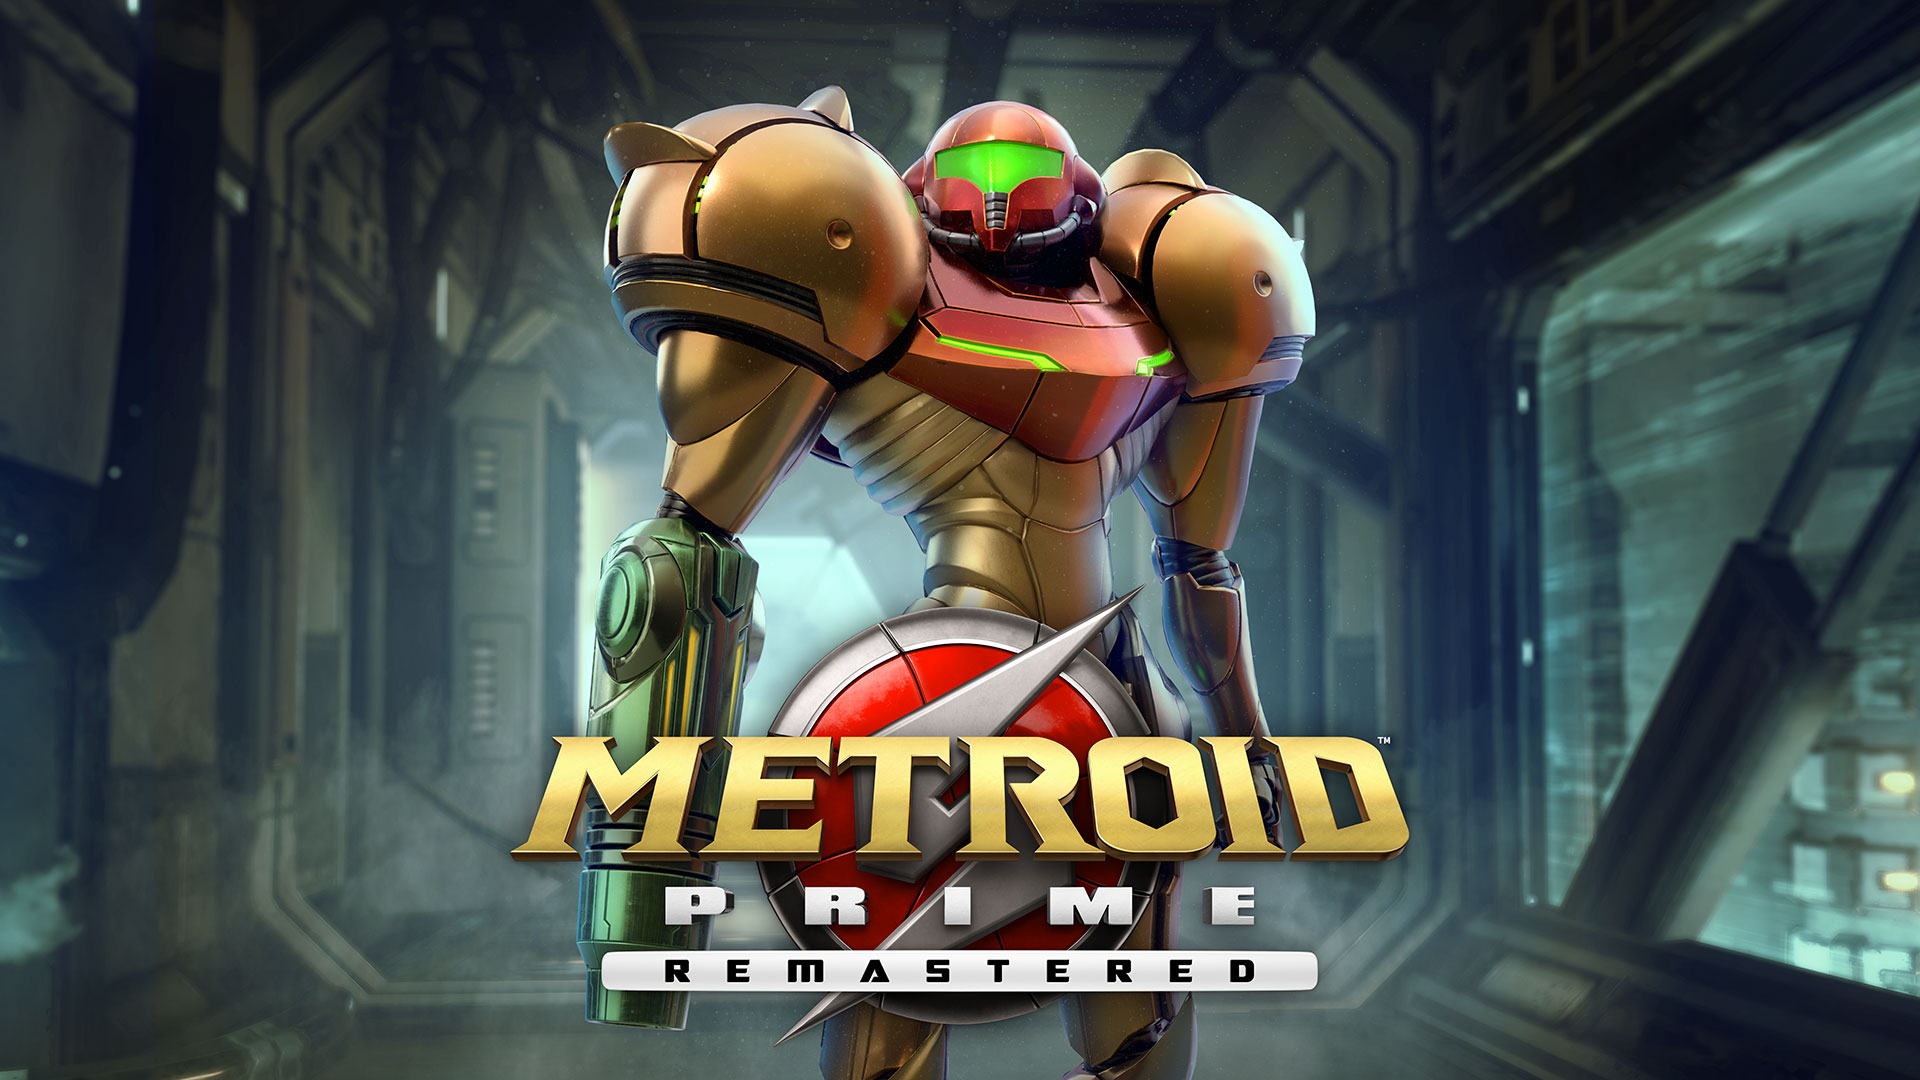 Metroid Prime™ Remastered